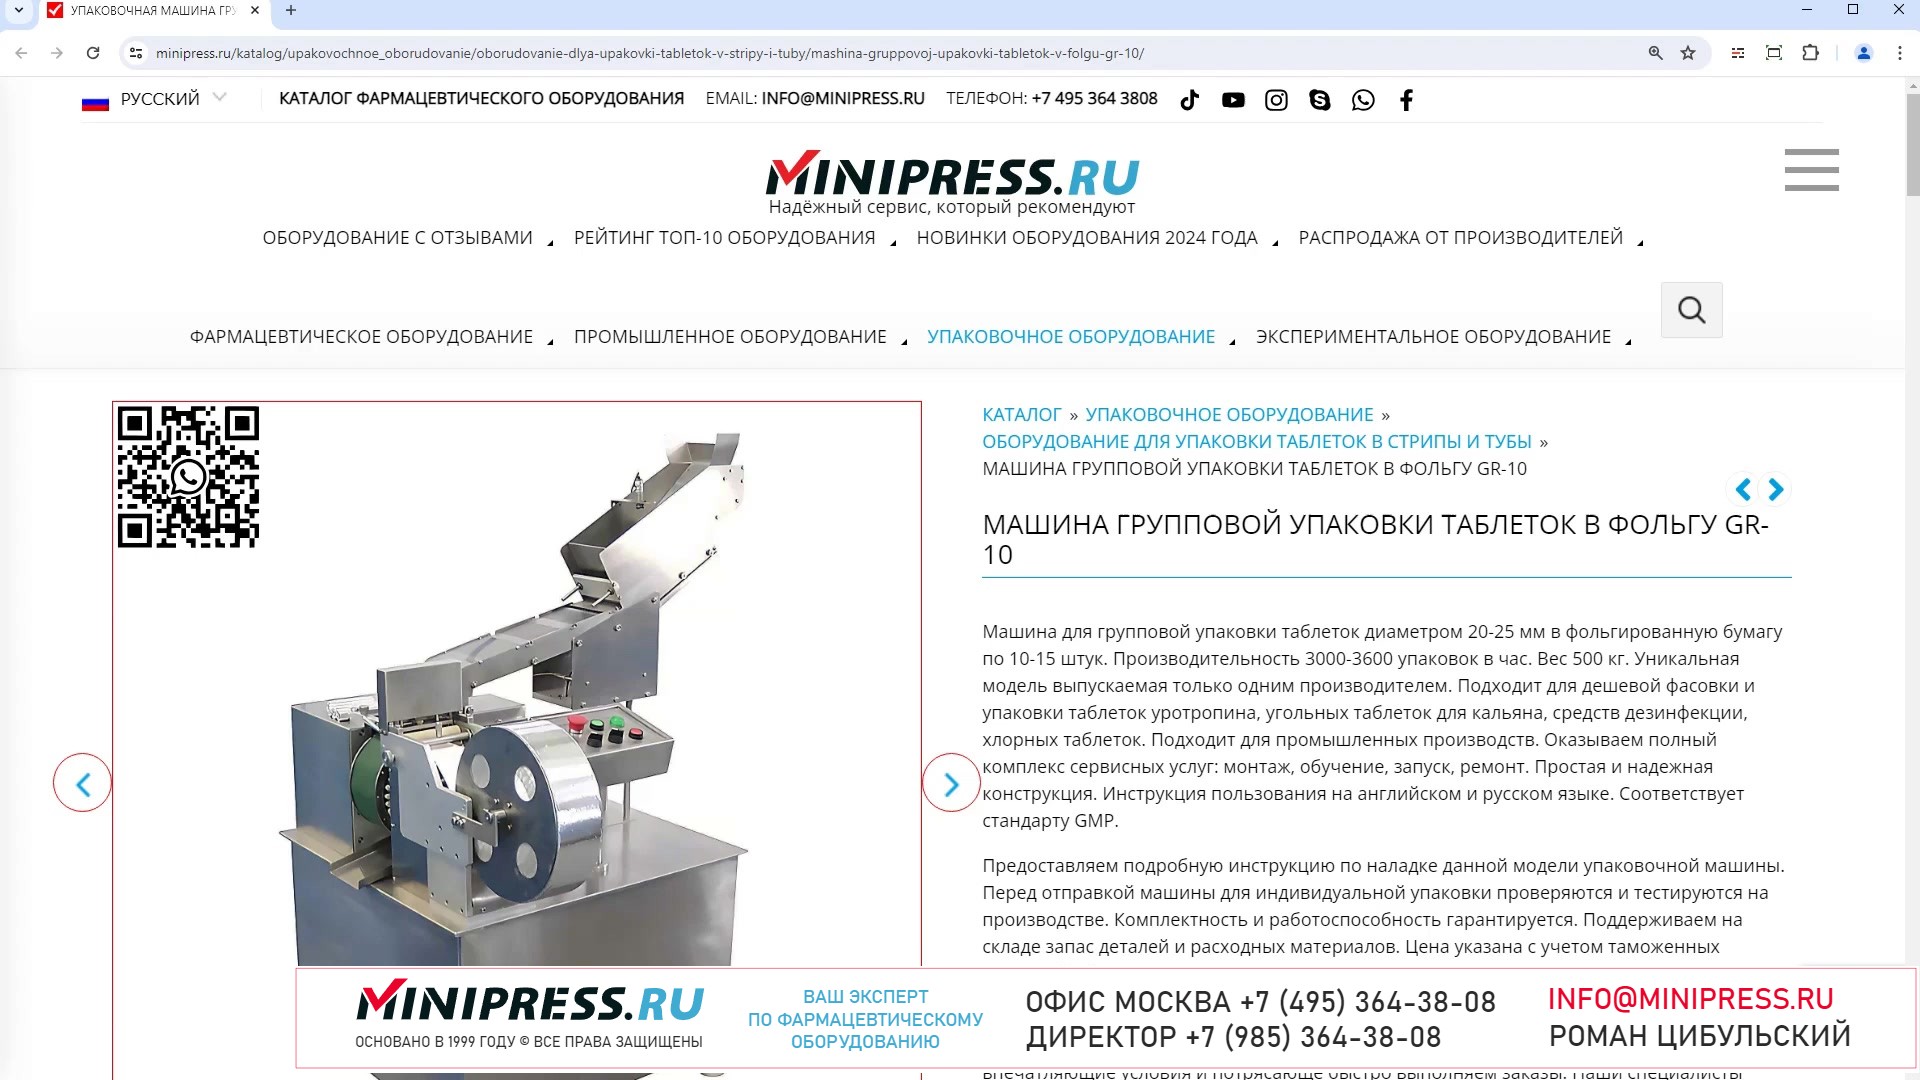 Minipress.ru Машина групповой упаковки таблеток в фольгу GR-10